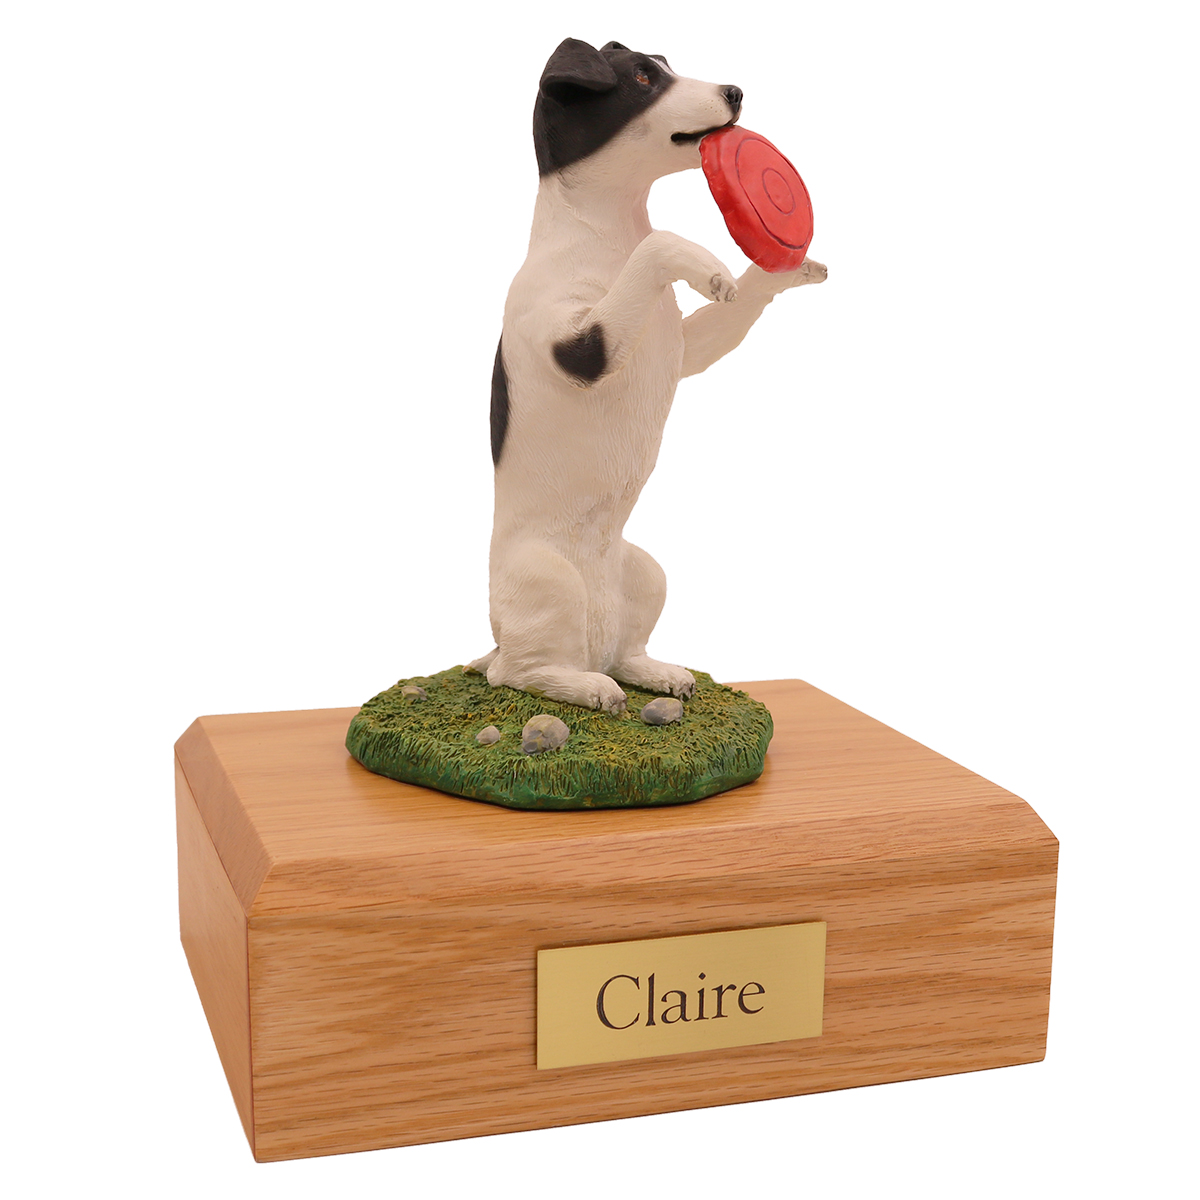 Dog, Jack Russell Terrier, Black & White, Frisbee - Figurine Urn